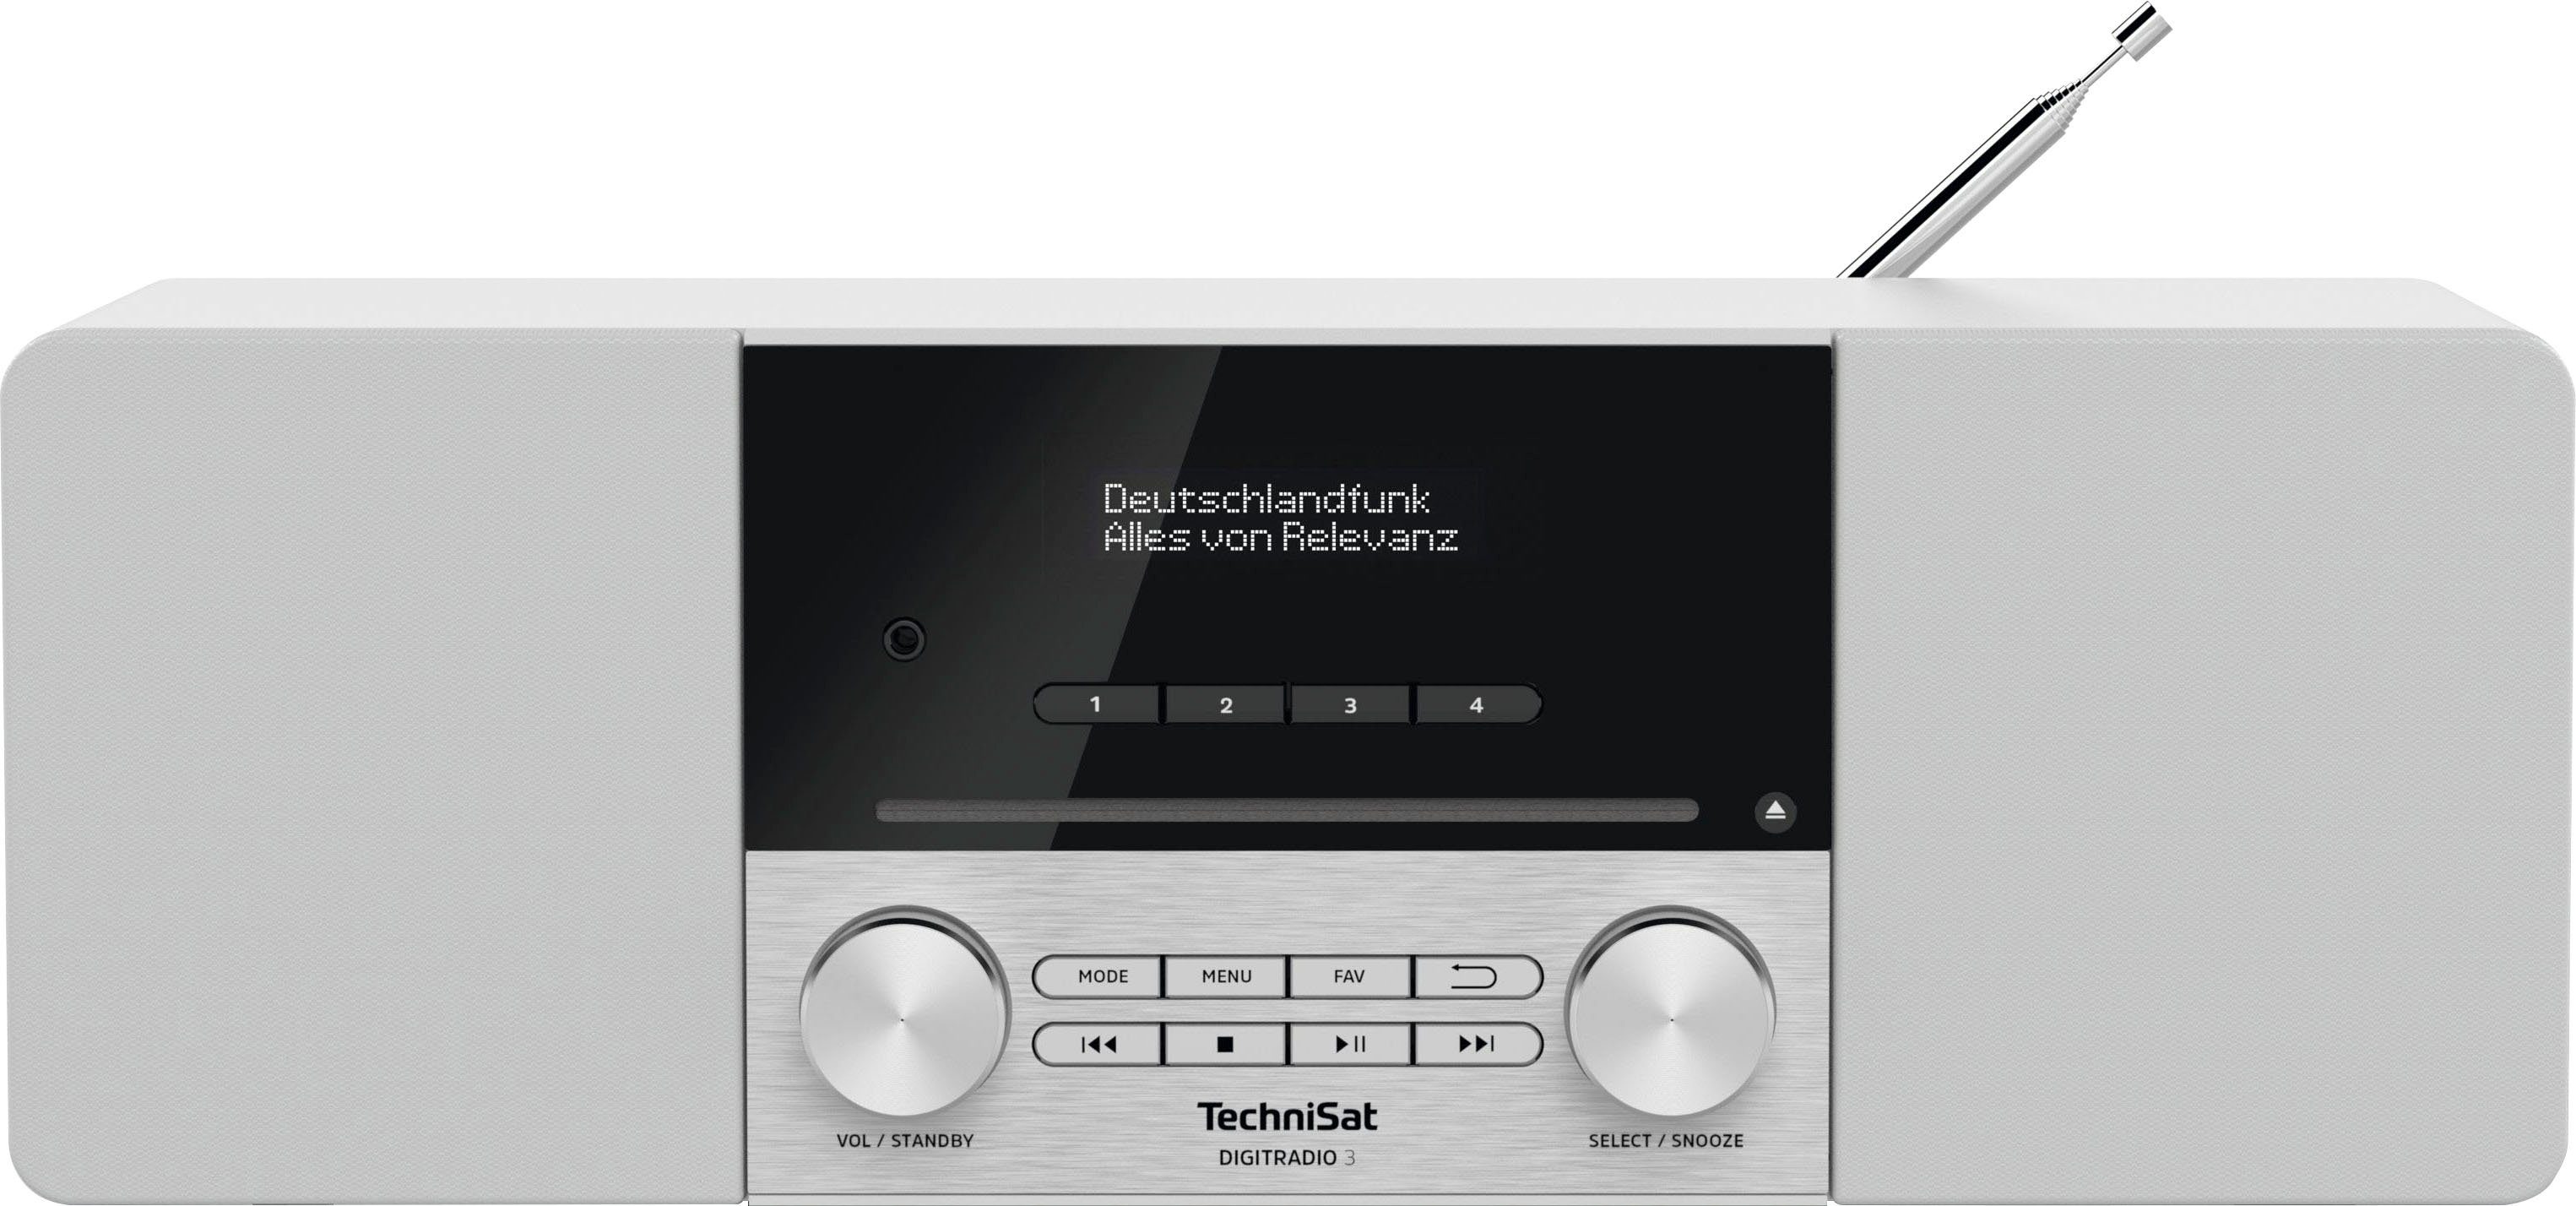 20 (DAB), RDS, DIGITRADIO CD-Player, Made in W, (DAB) mit 3 TechniSat (Digitalradio weiß UKW Germany) Digitalradio